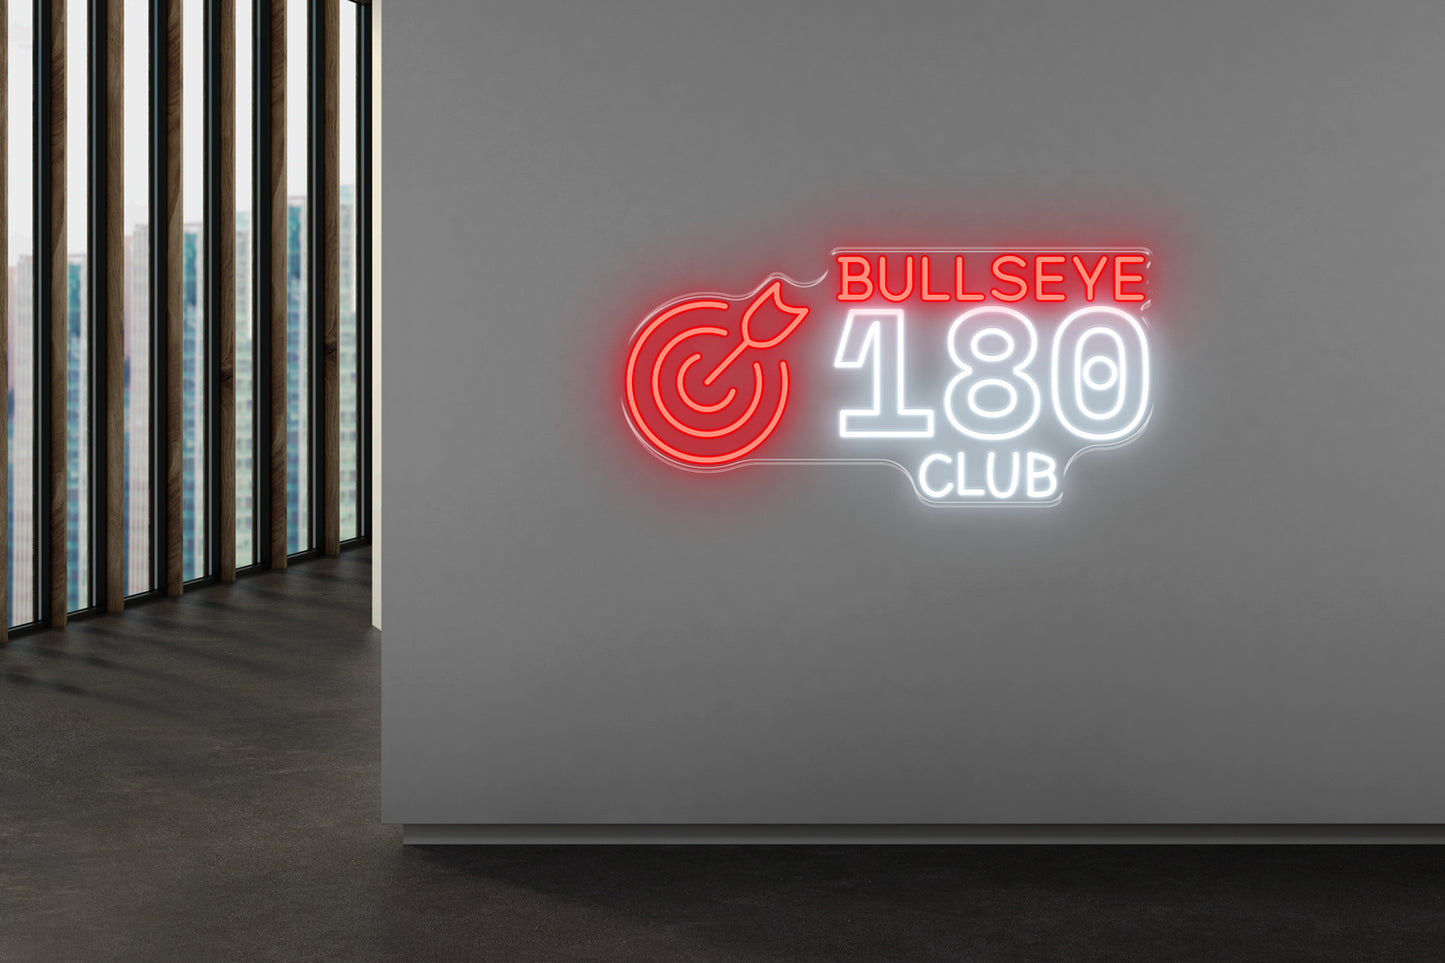 PowerLED Neon Sign (Indoor) - BULLSEYE 180 CLUB